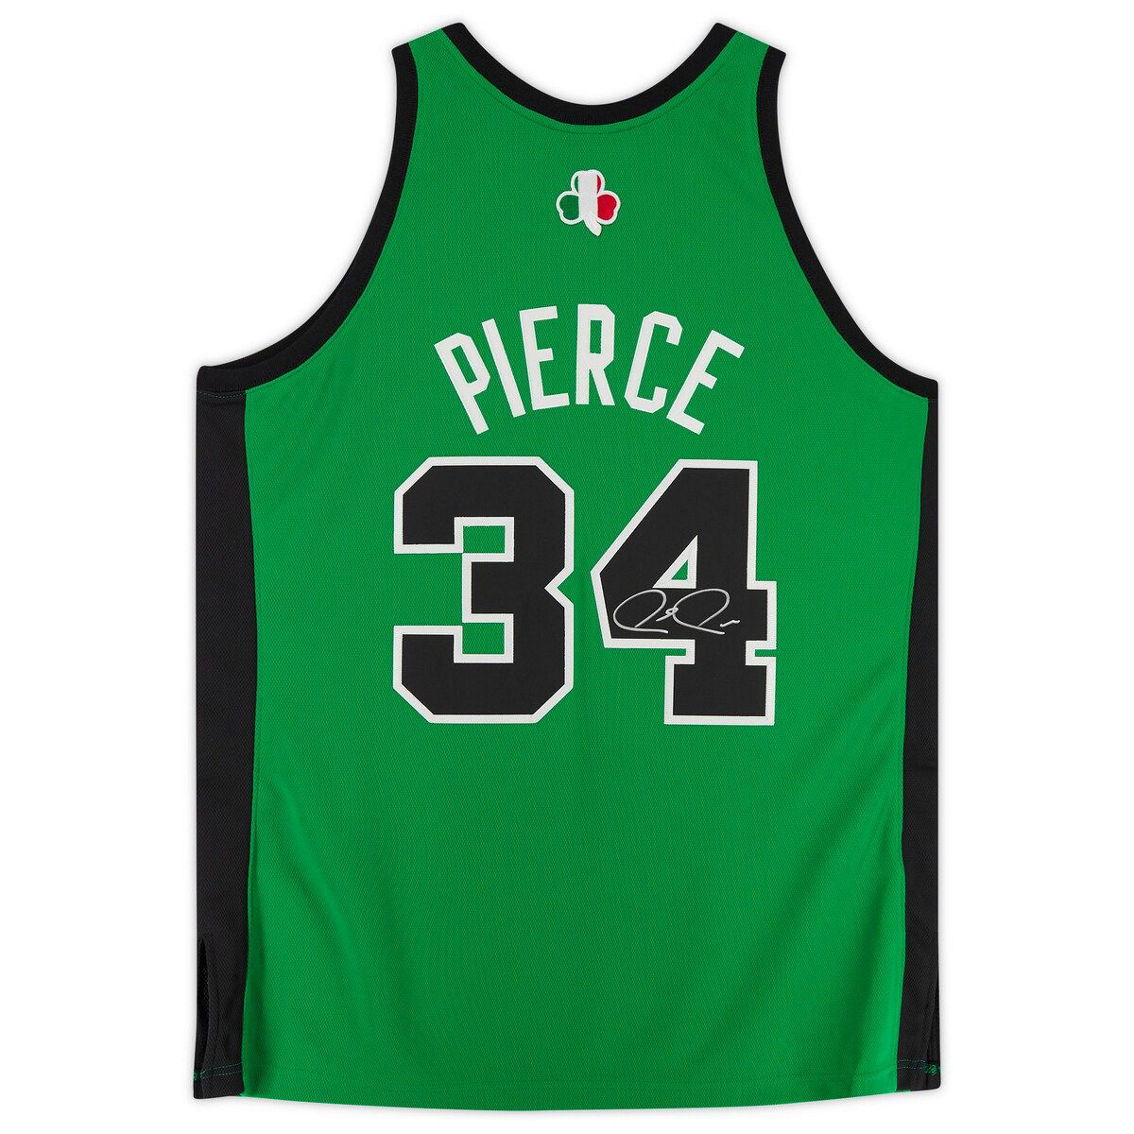 Fanatics Authentic Paul Pierce Green Boston Celtics Autographed 2007-08 Authentic Jersey - Image 3 of 4